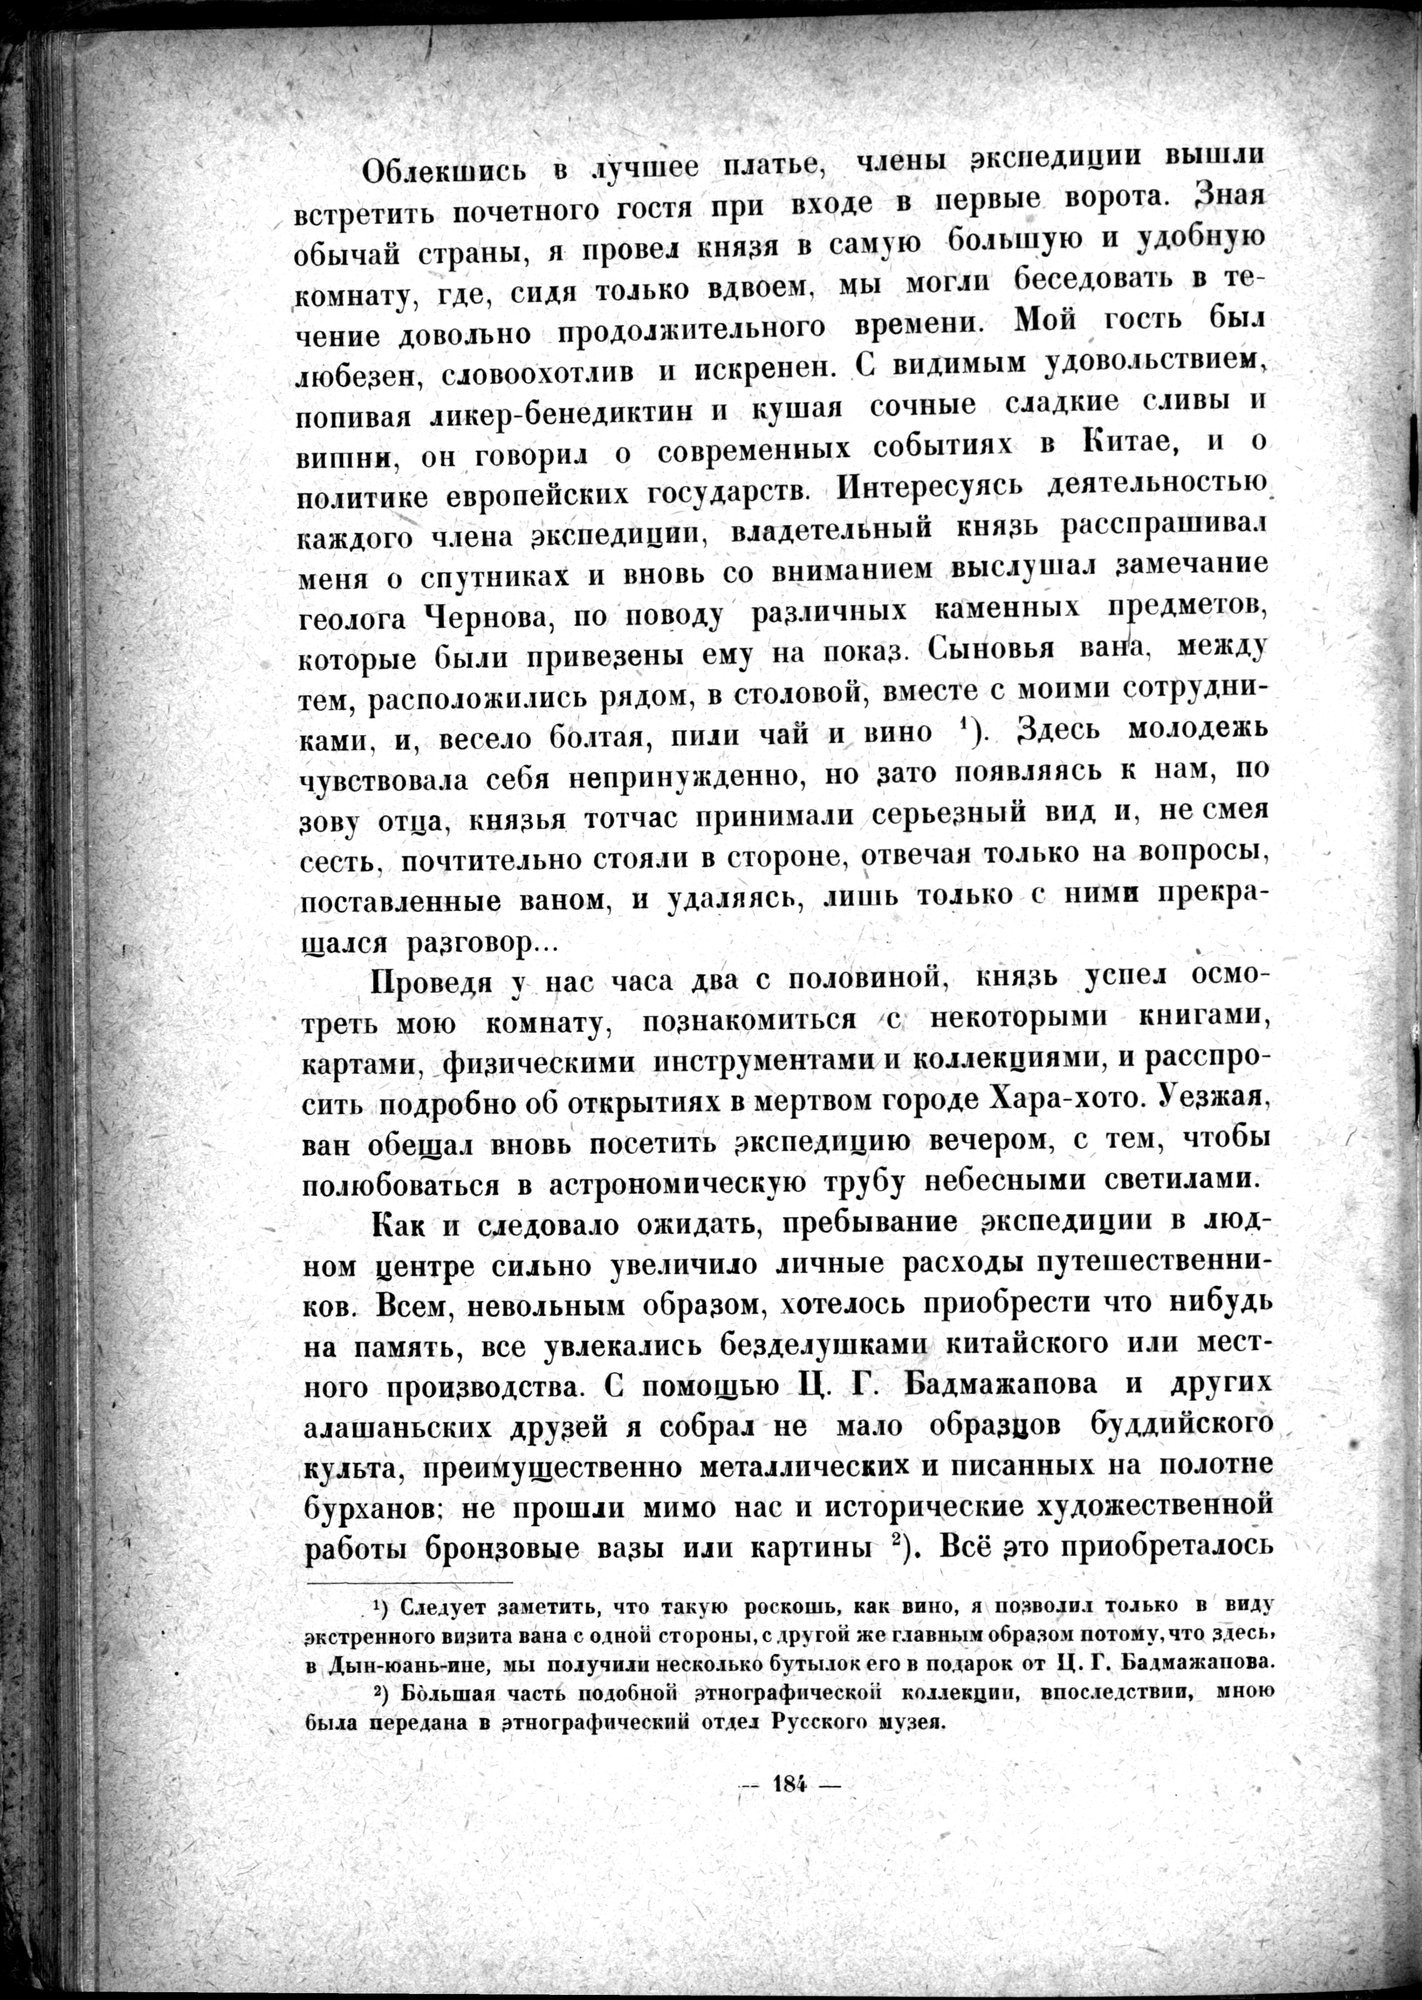 Mongoliya i Amdo i mertby gorod Khara-Khoto : vol.1 / Page 218 (Grayscale High Resolution Image)